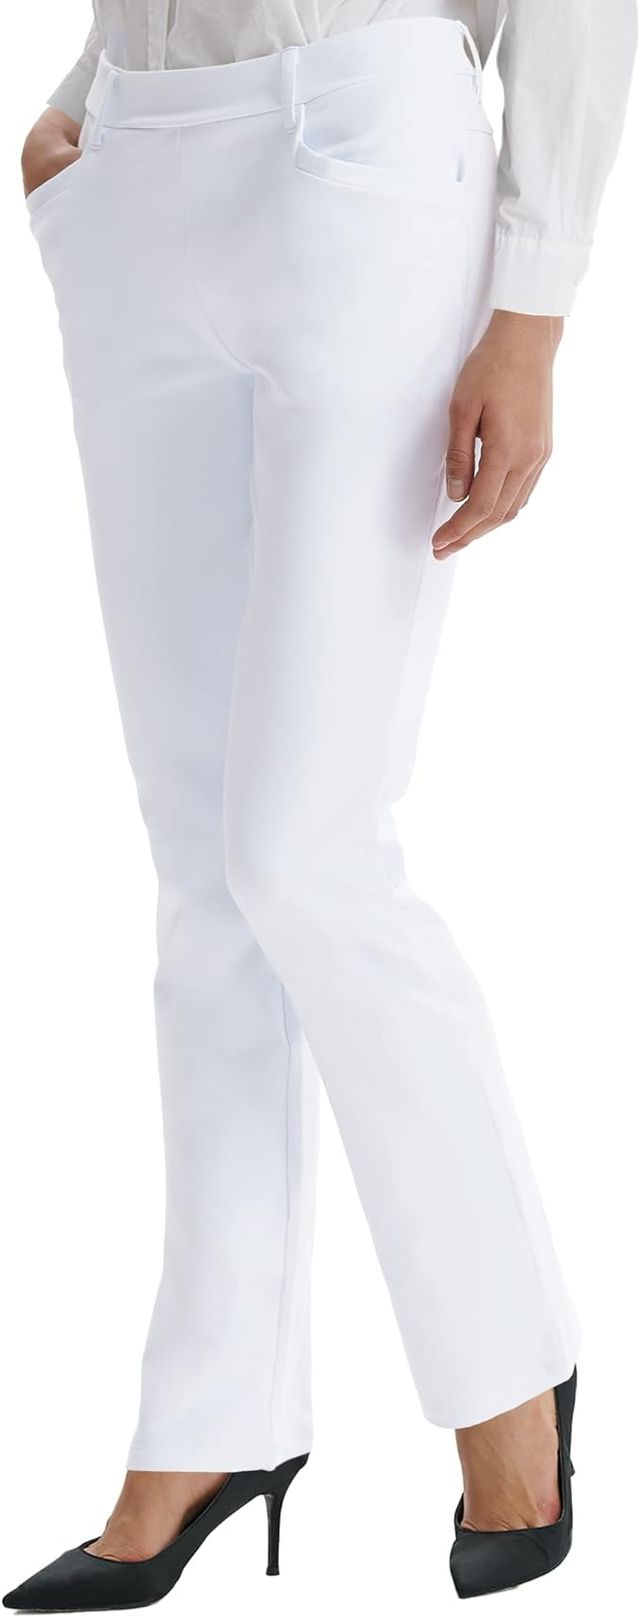 pantalón blanco de vestir de amazon